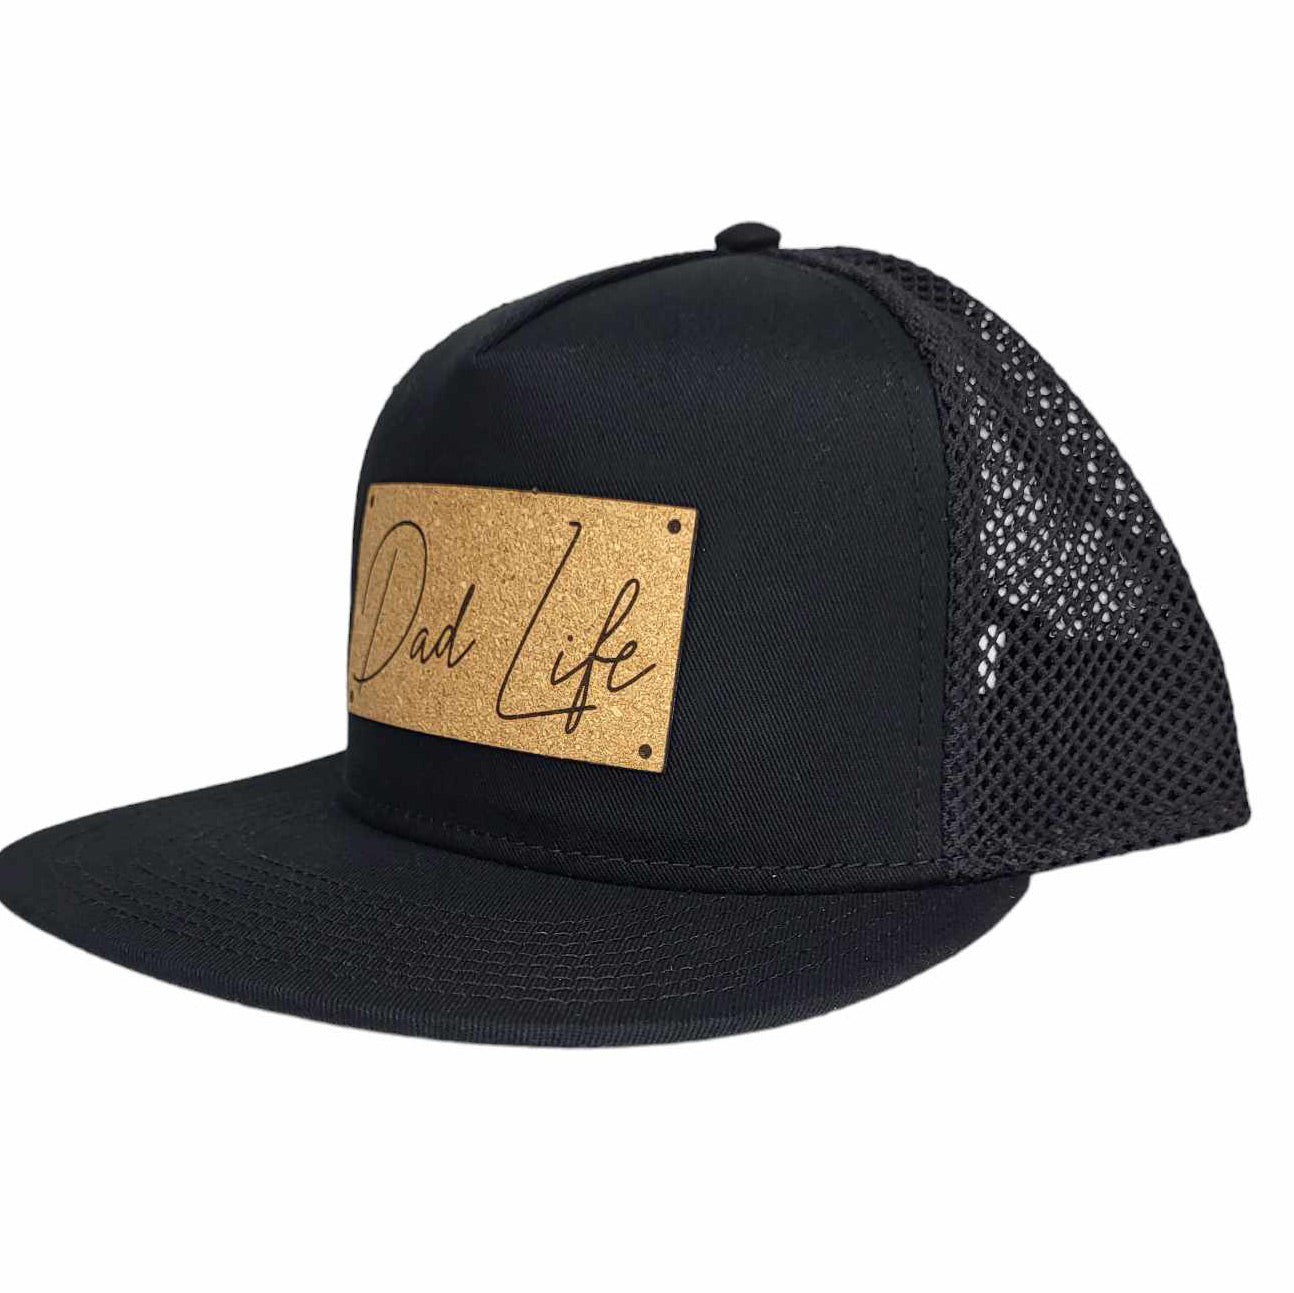 Dad Life Hat